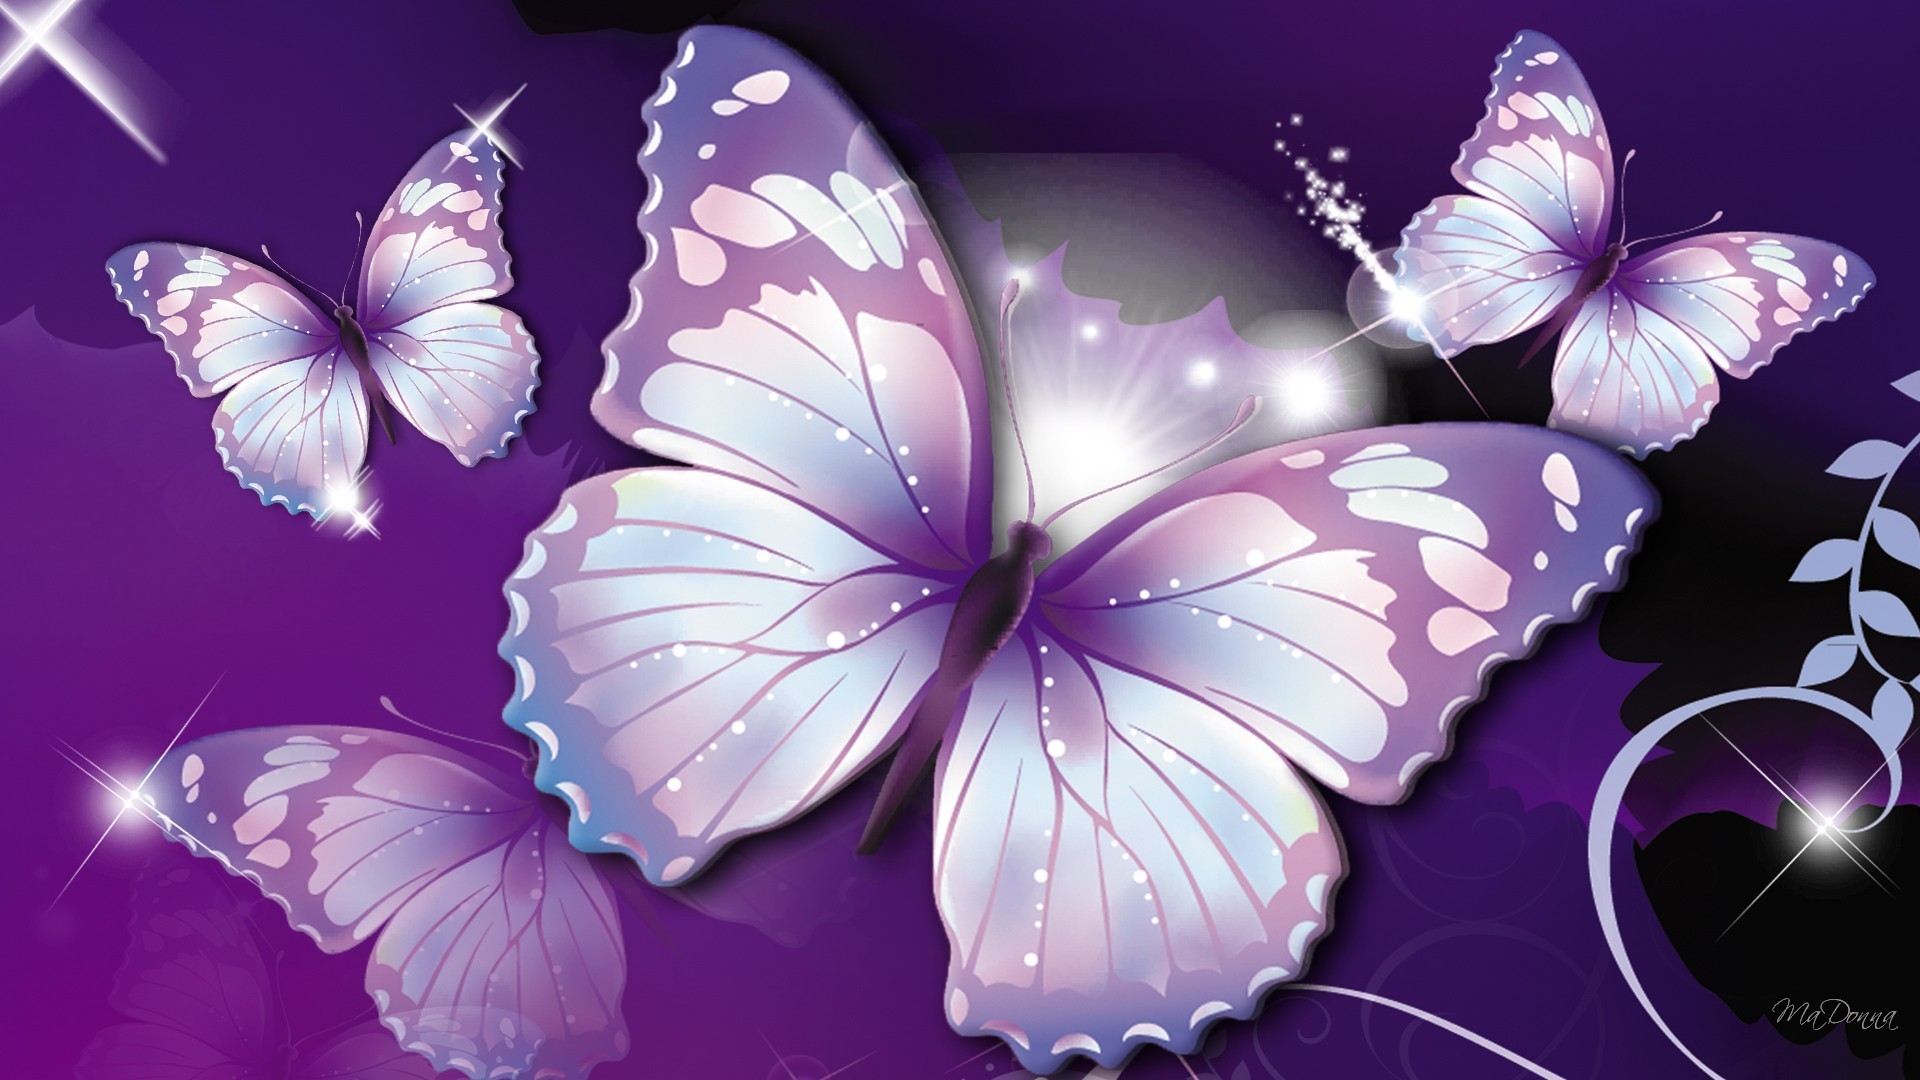 1920x1080  Beautiful and pretty purple butterflies Ã¢â¢Â¡Ã¢â¢Â¡Ã¢â¢Â¡. HD Wallpaper  and background photos of Purple Butterflies Ã¢â¢Â¡ for fans of Butterflies  images.